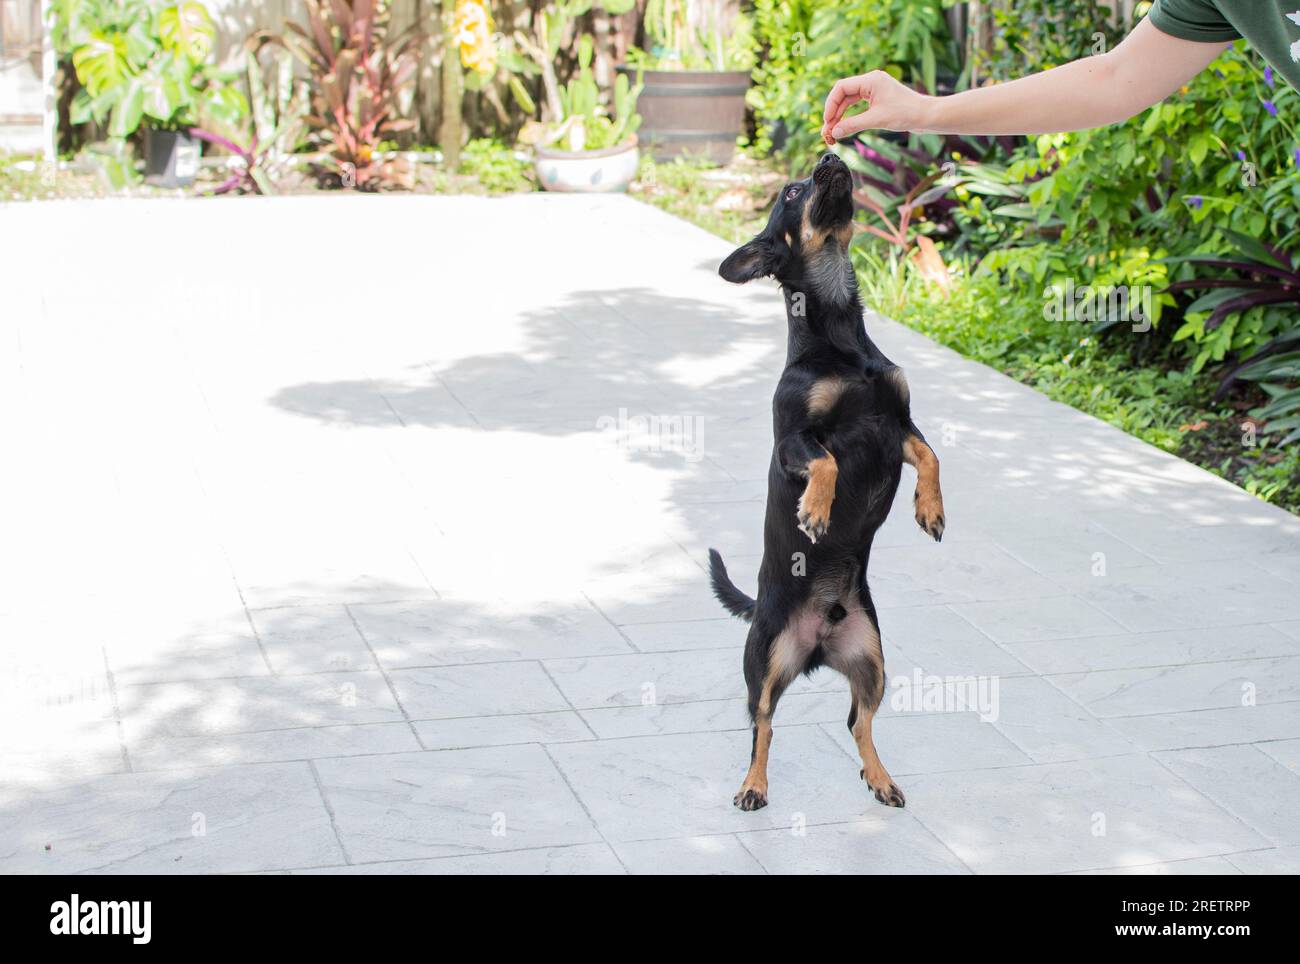 1,116 Teaching Dog Trick Images, Stock Photos & Vectors